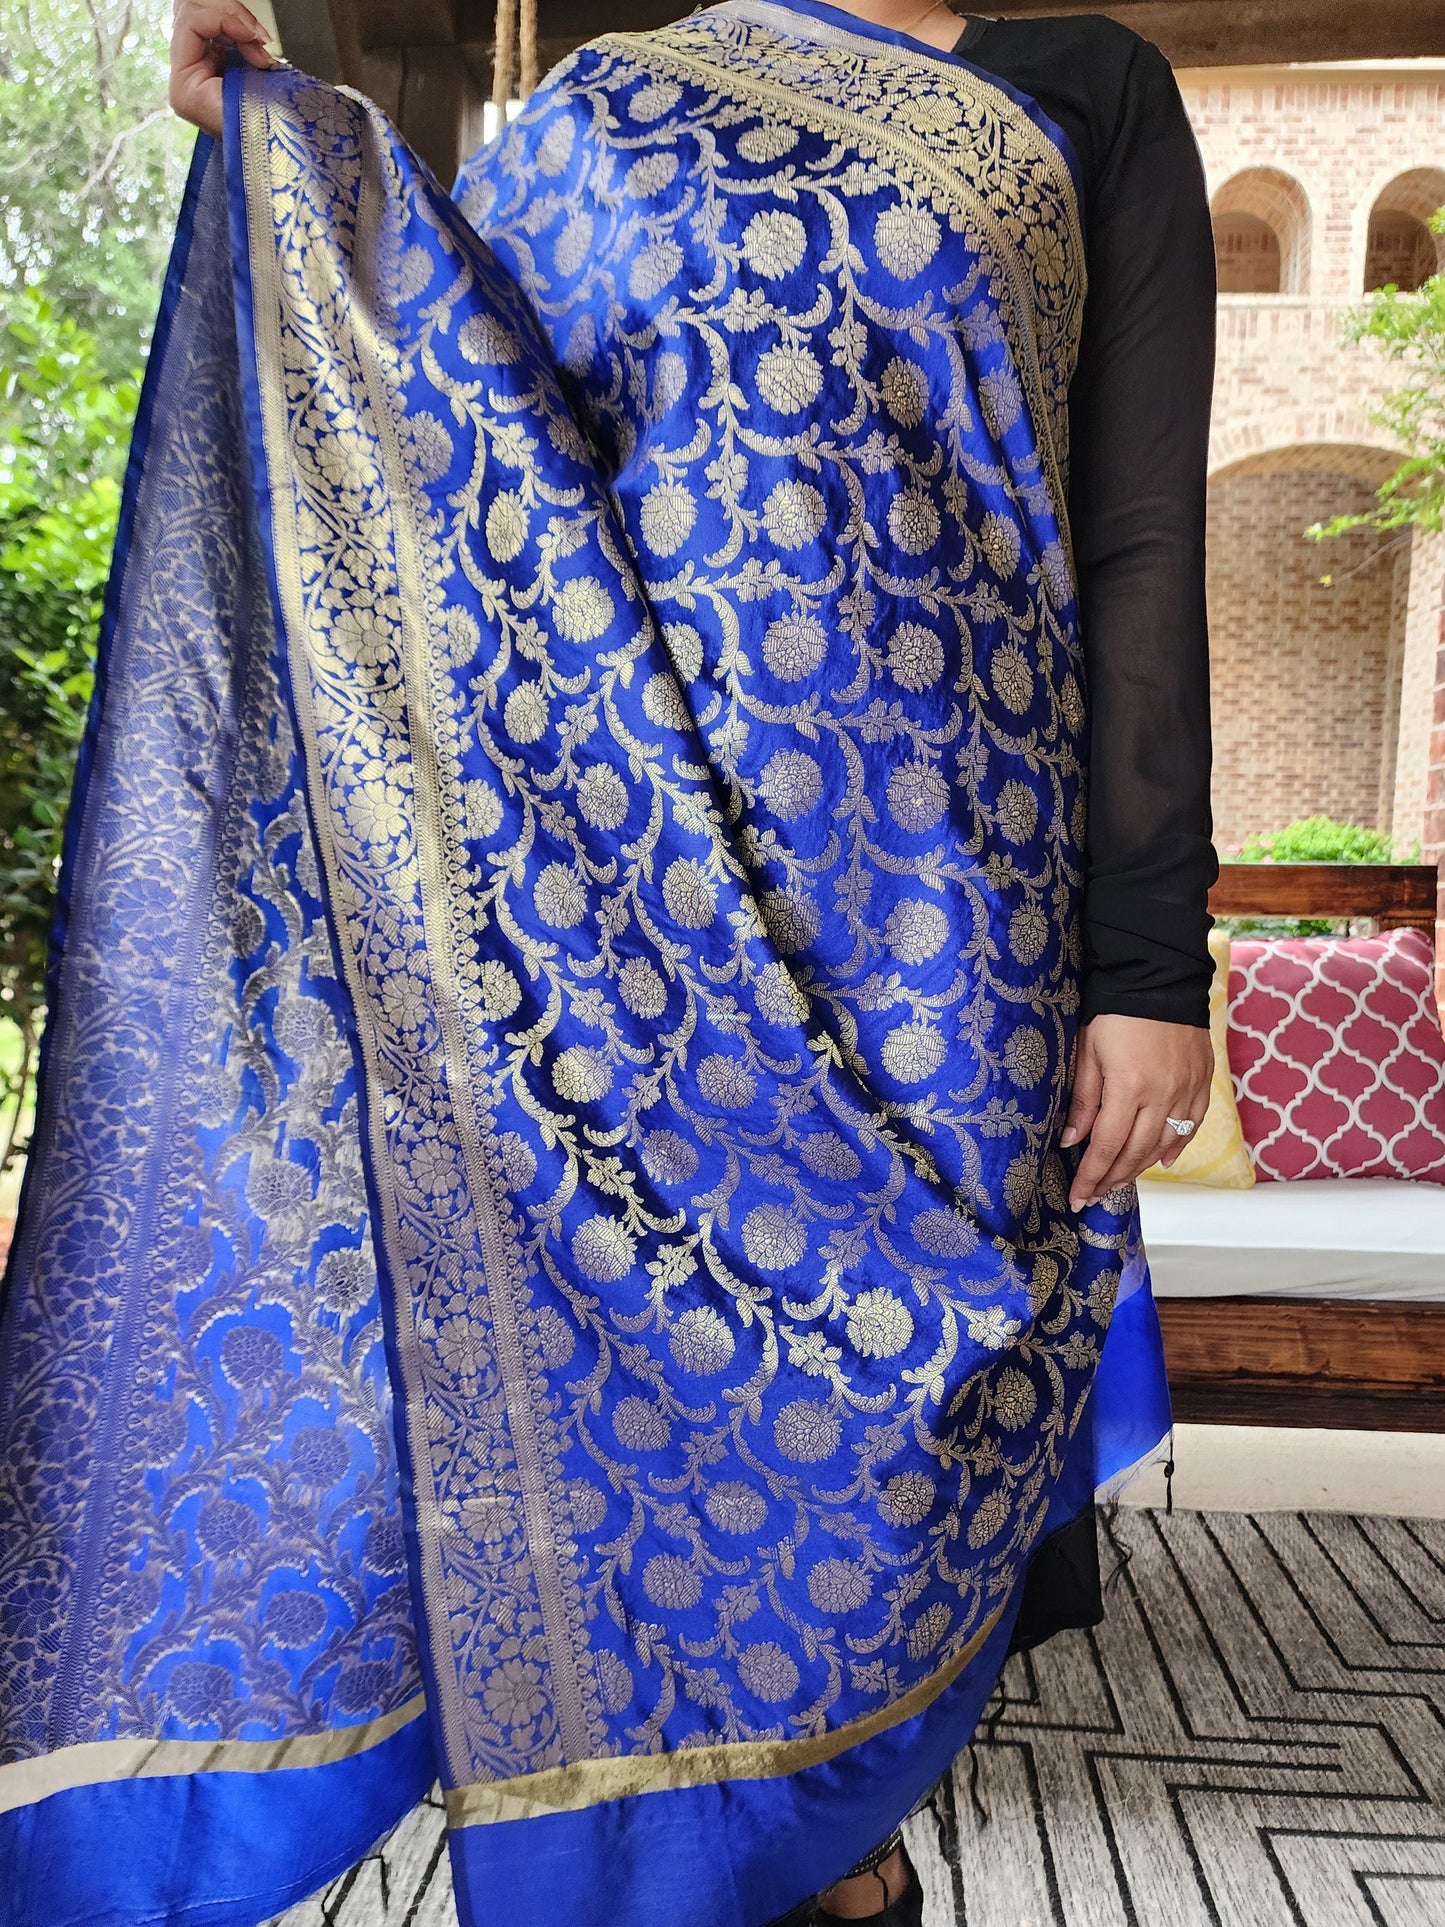 Banarasi Royal Blue Dupatta with gold handweaving, Indian traditional and Festive designer dupatta, luxurious, soft to touch  dupatta